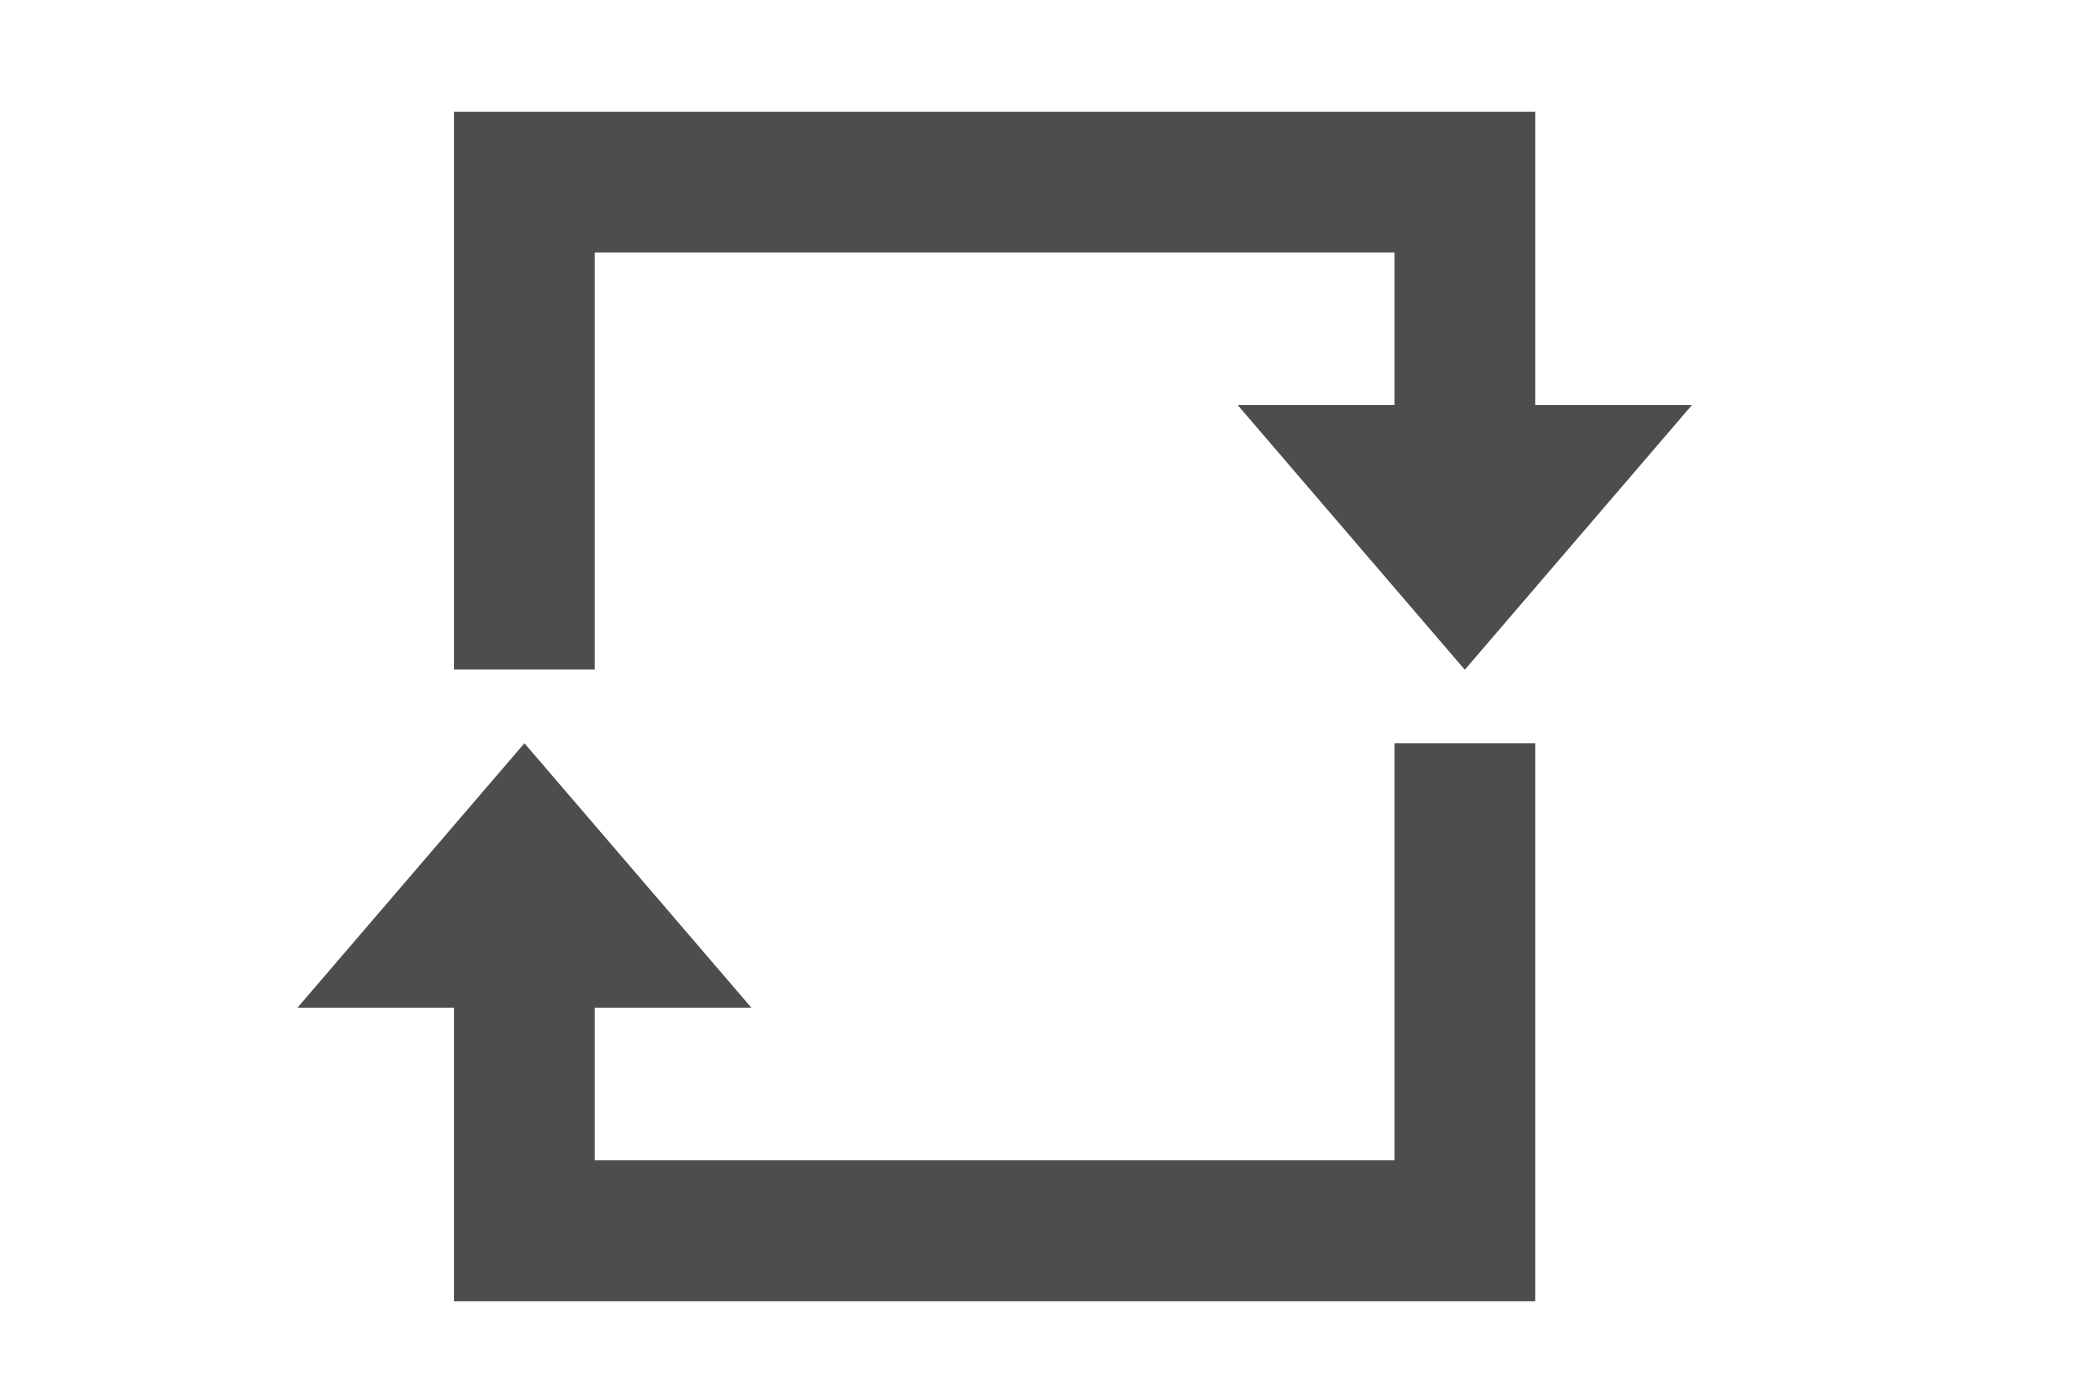 Recycle symbol / Teamwork / Direction / Spinning arrow / Direction / Forward / Clip art / Vector / Beju curve / ai file / Edit